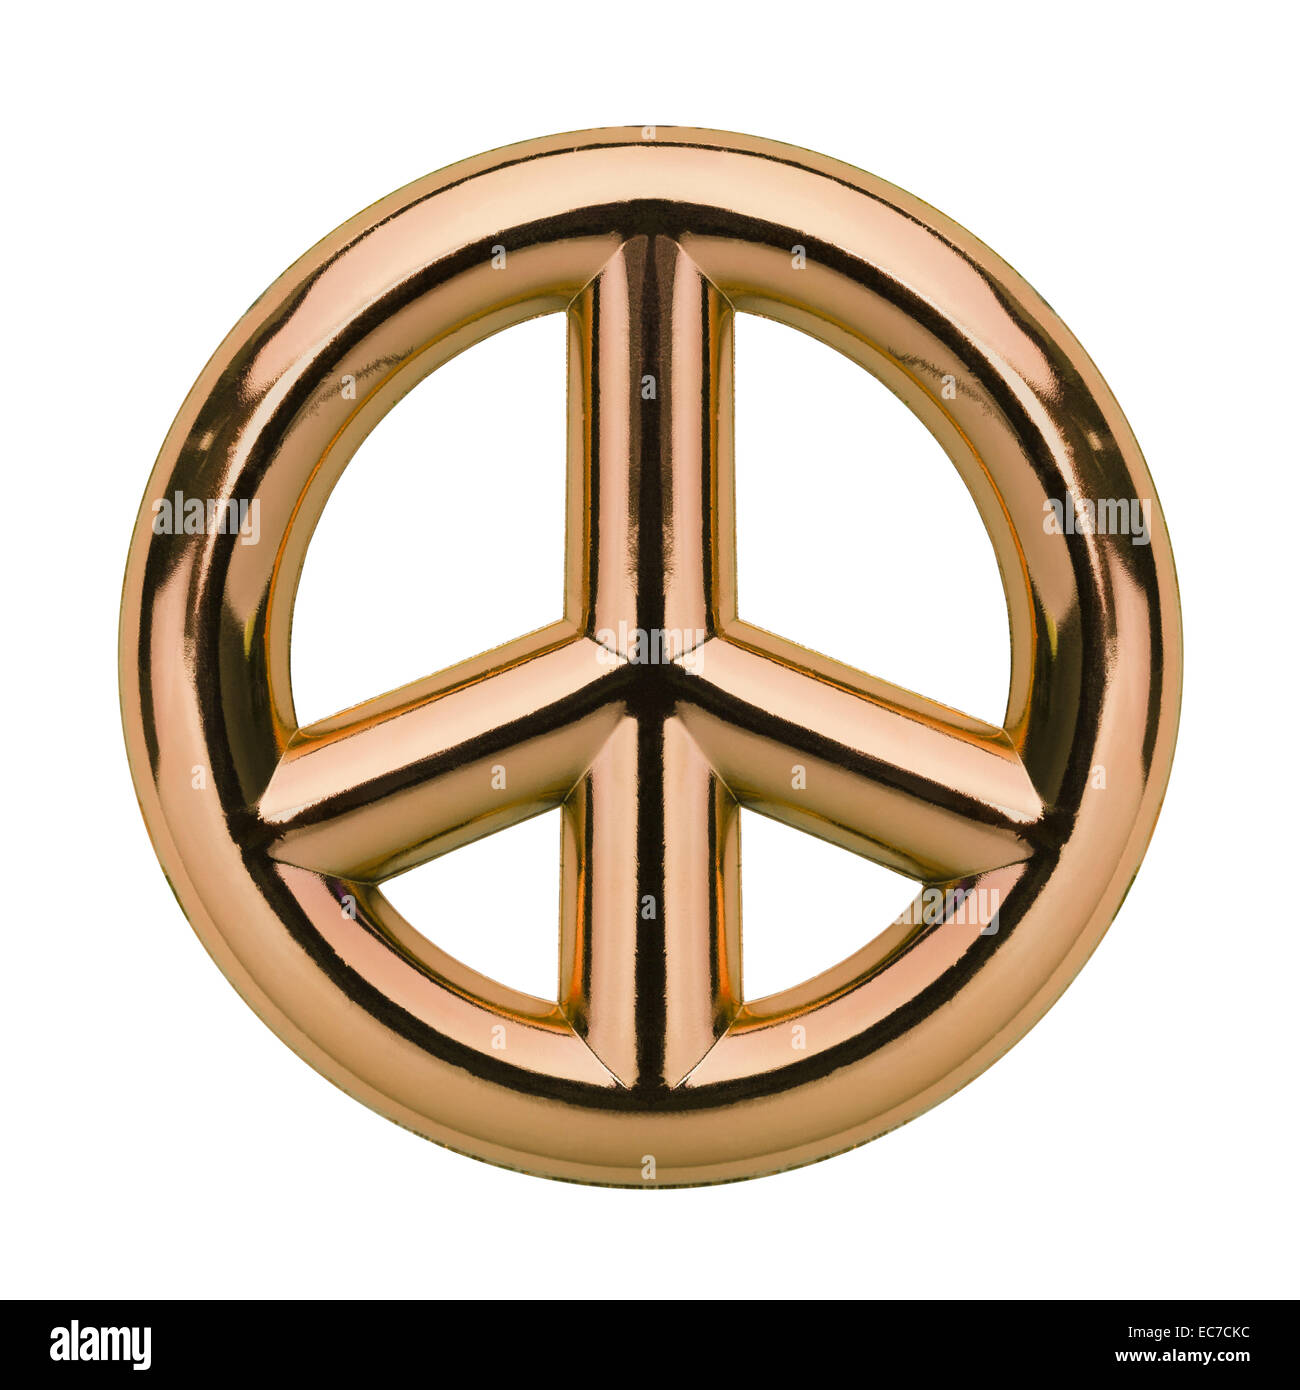 Metallic Gold Peace Symbol Isolated on White Background. Stock Photo